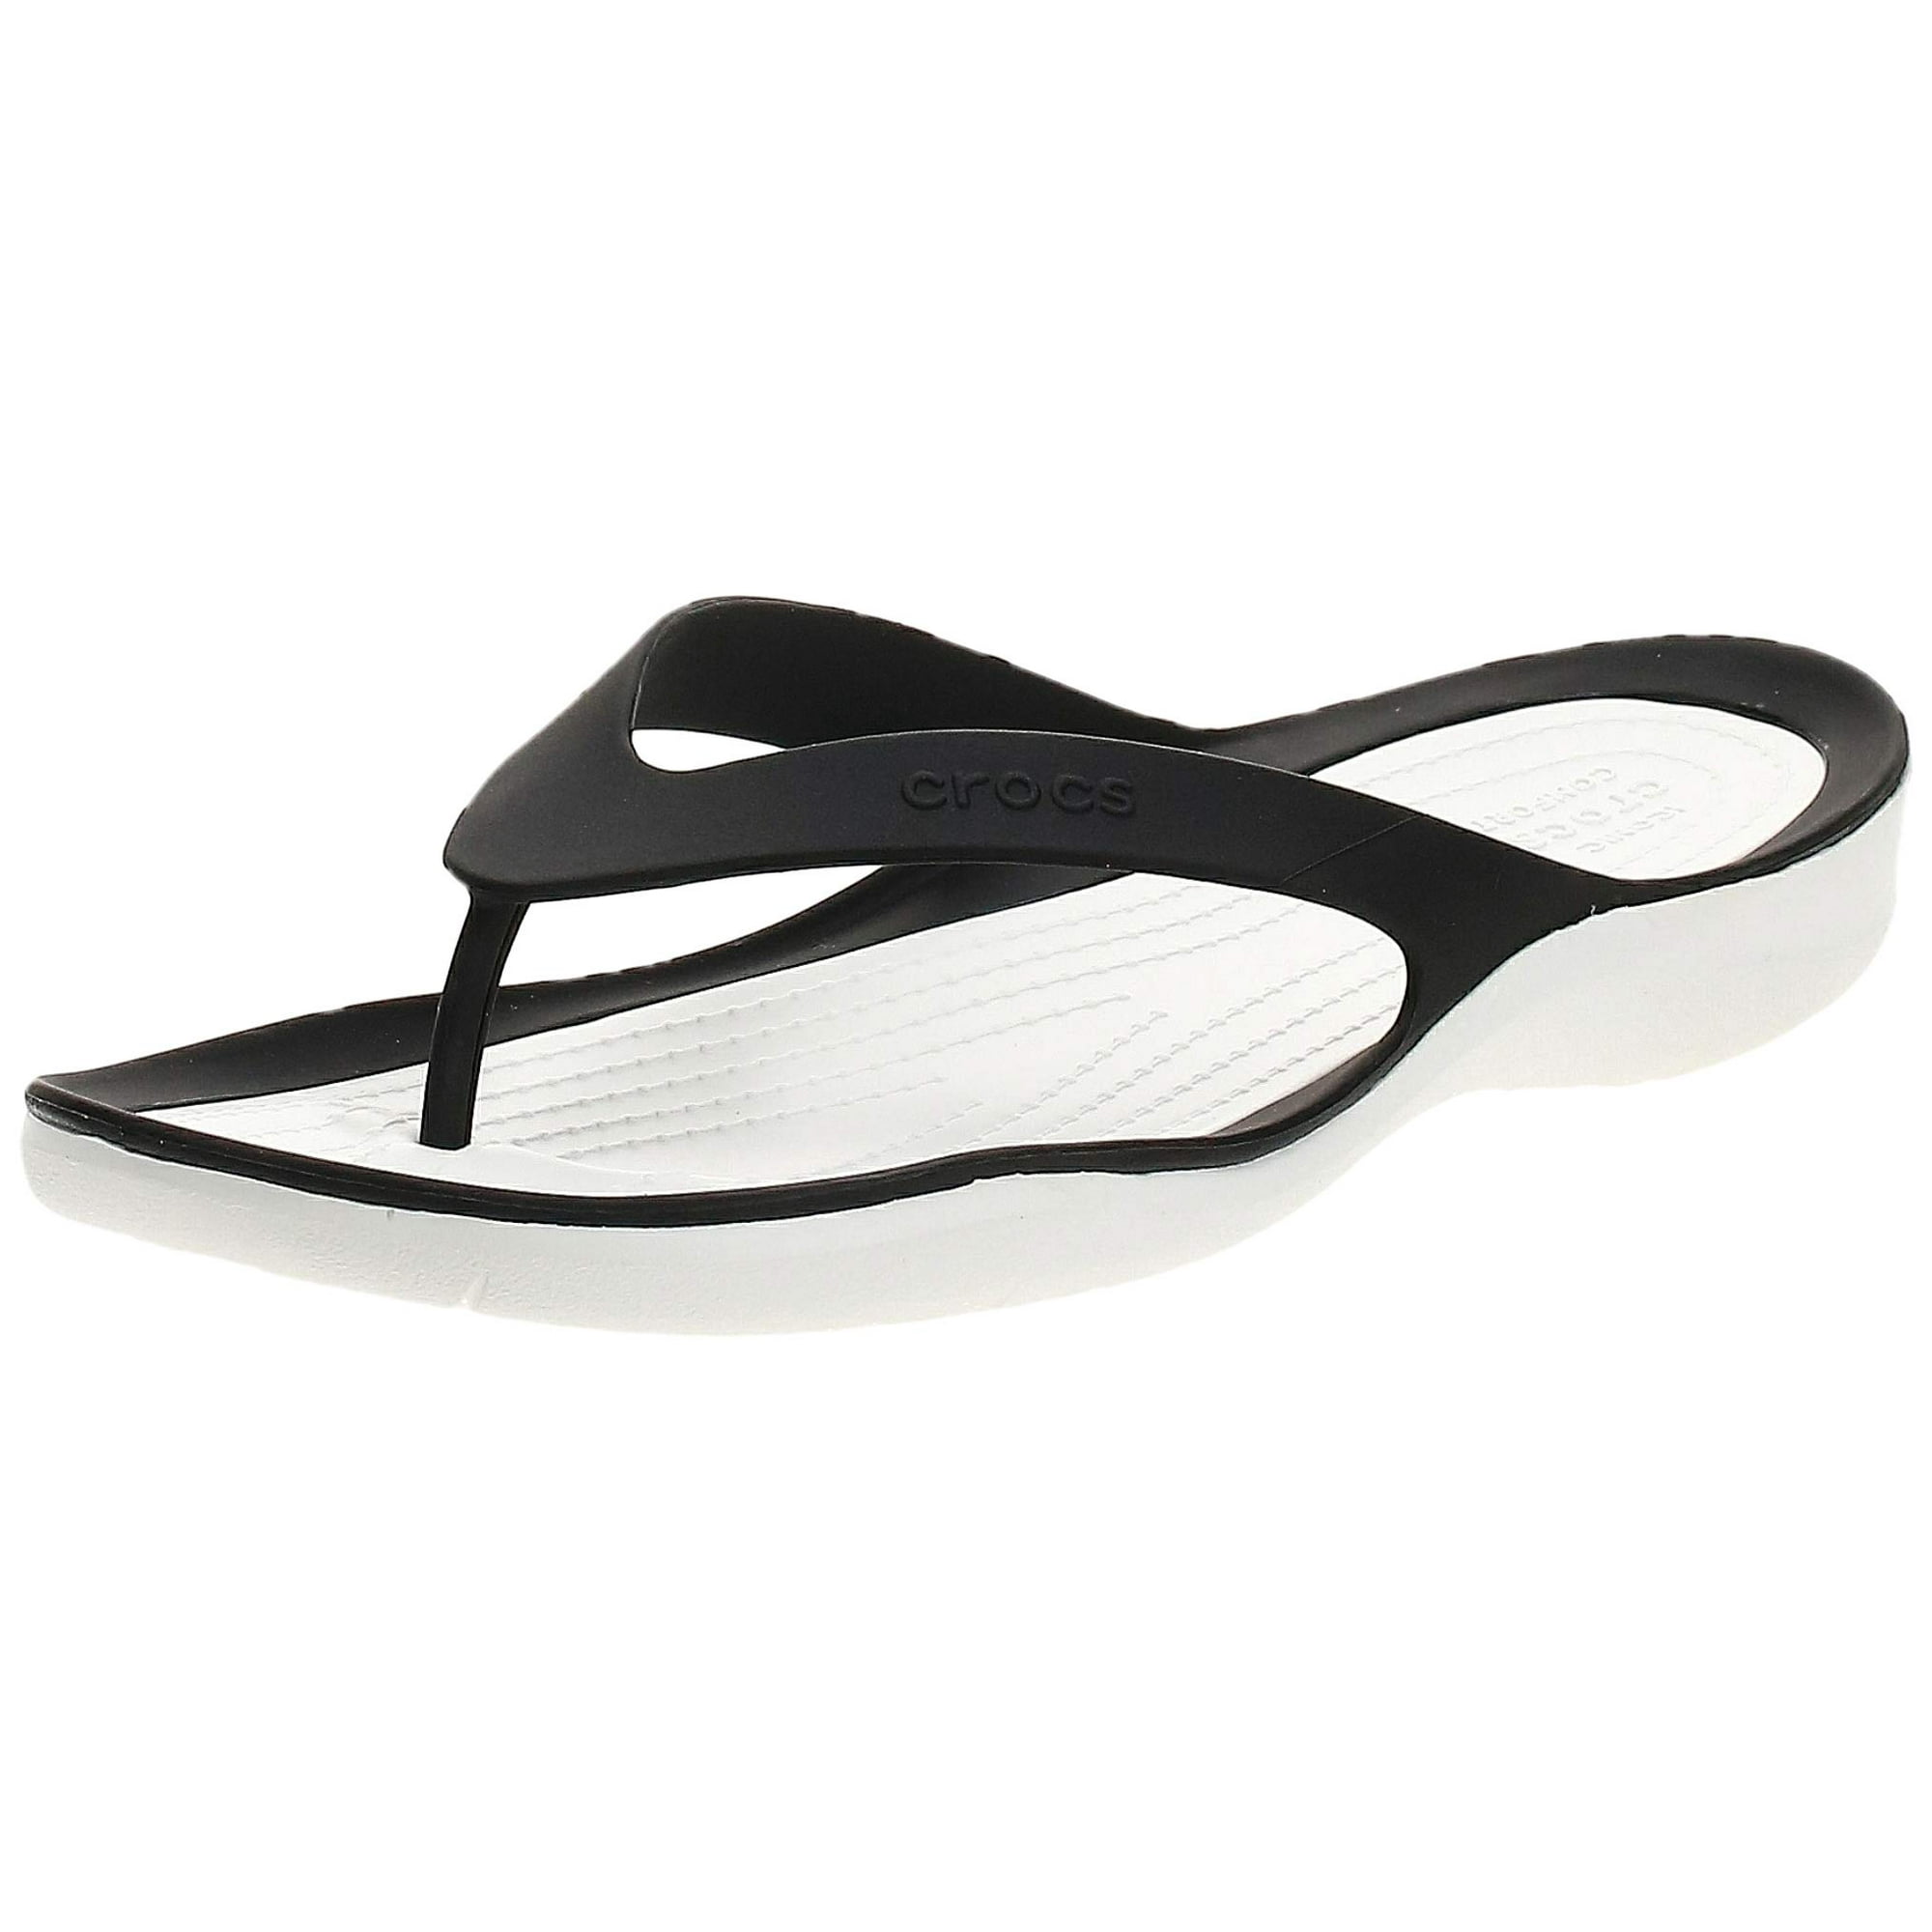 Crocs Women's Swiftwater Flip-flop, Black/White, 5 M US | Walmart Canada